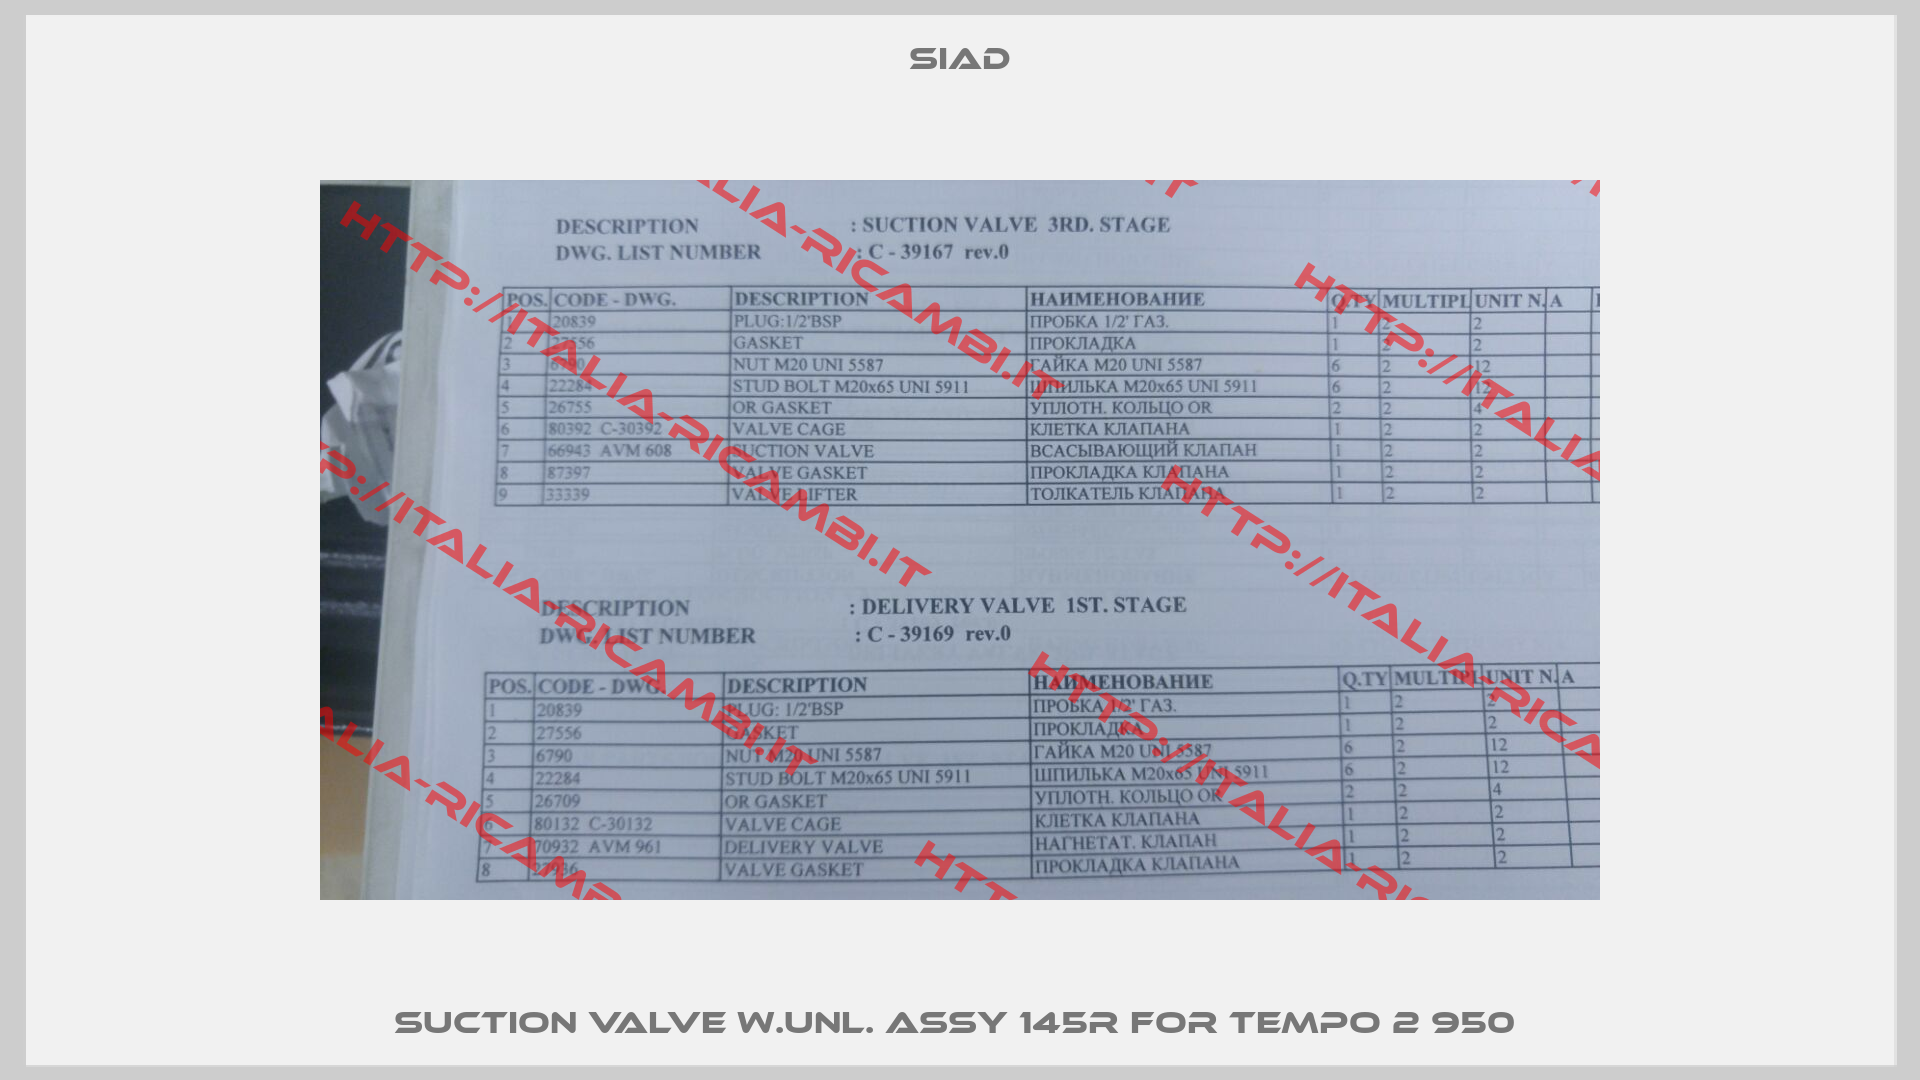 Suction Valve W.Unl. Assy 145R FOR TEMPO 2 950 -5